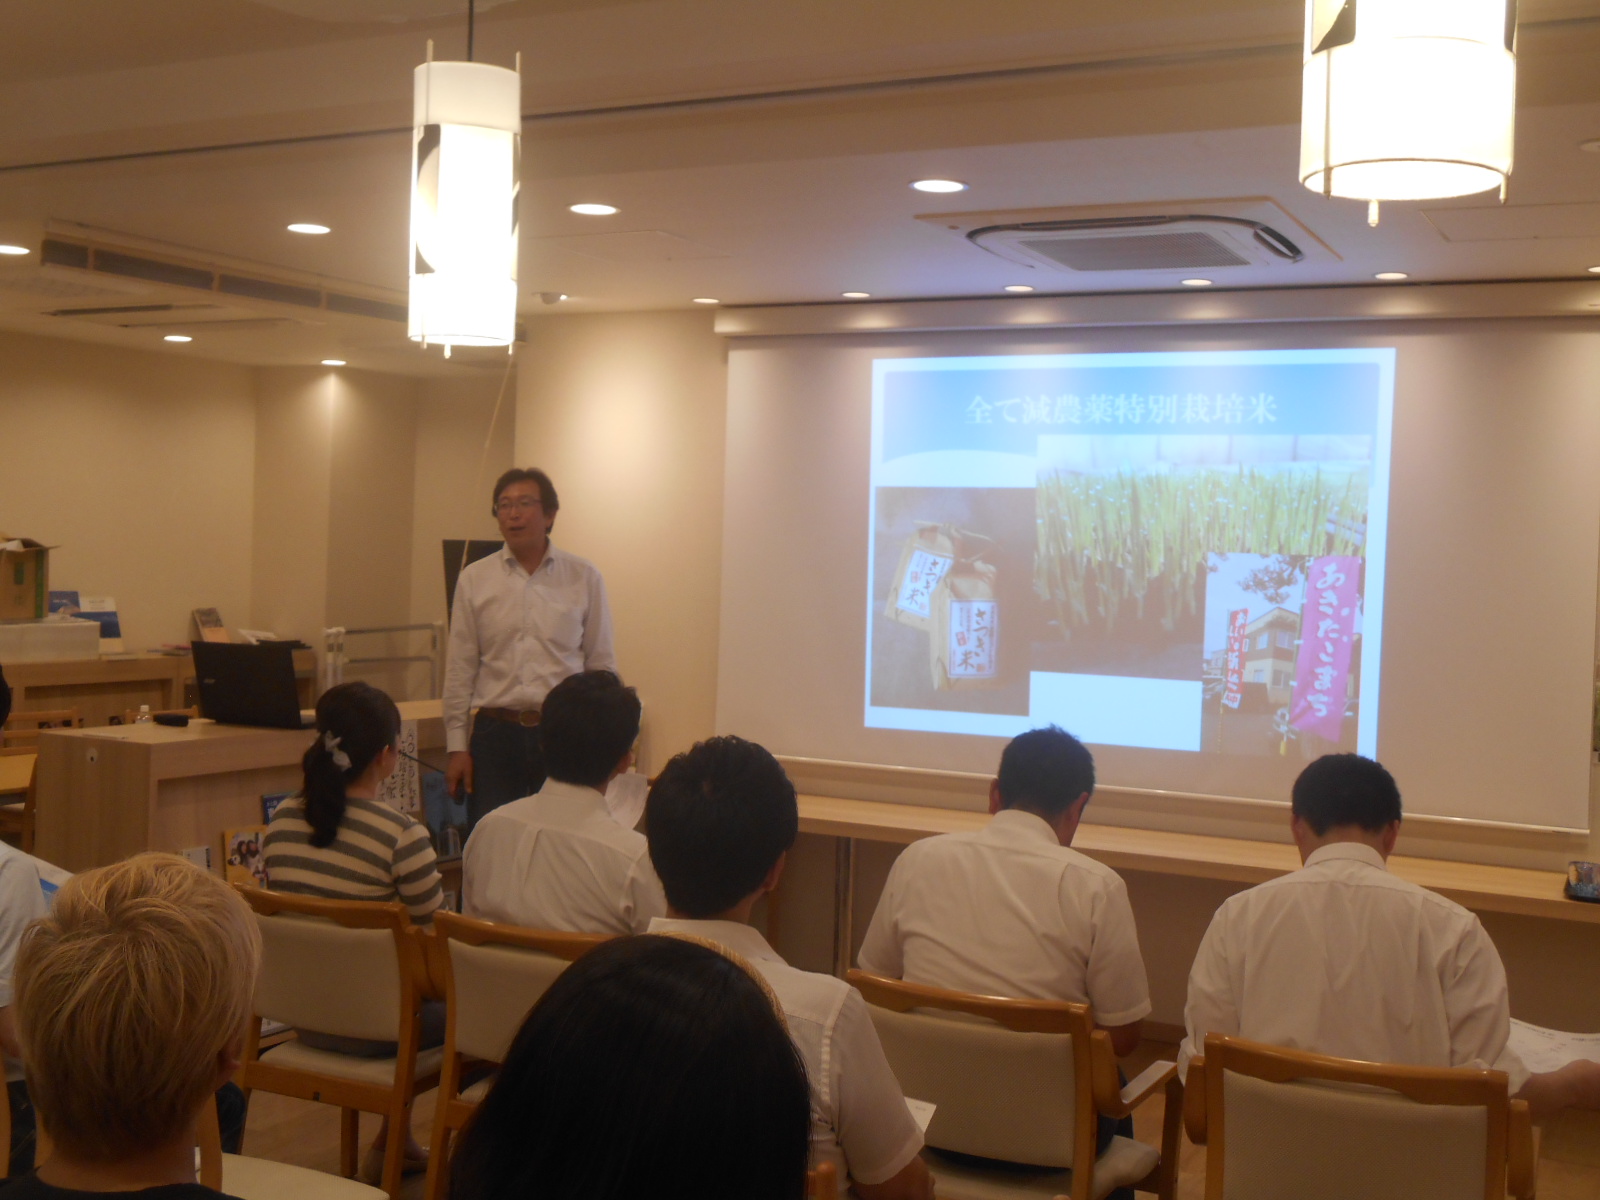 DSCN1830 - AoMoLink〜赤坂〜の第2回勉強会&交流会開催します。